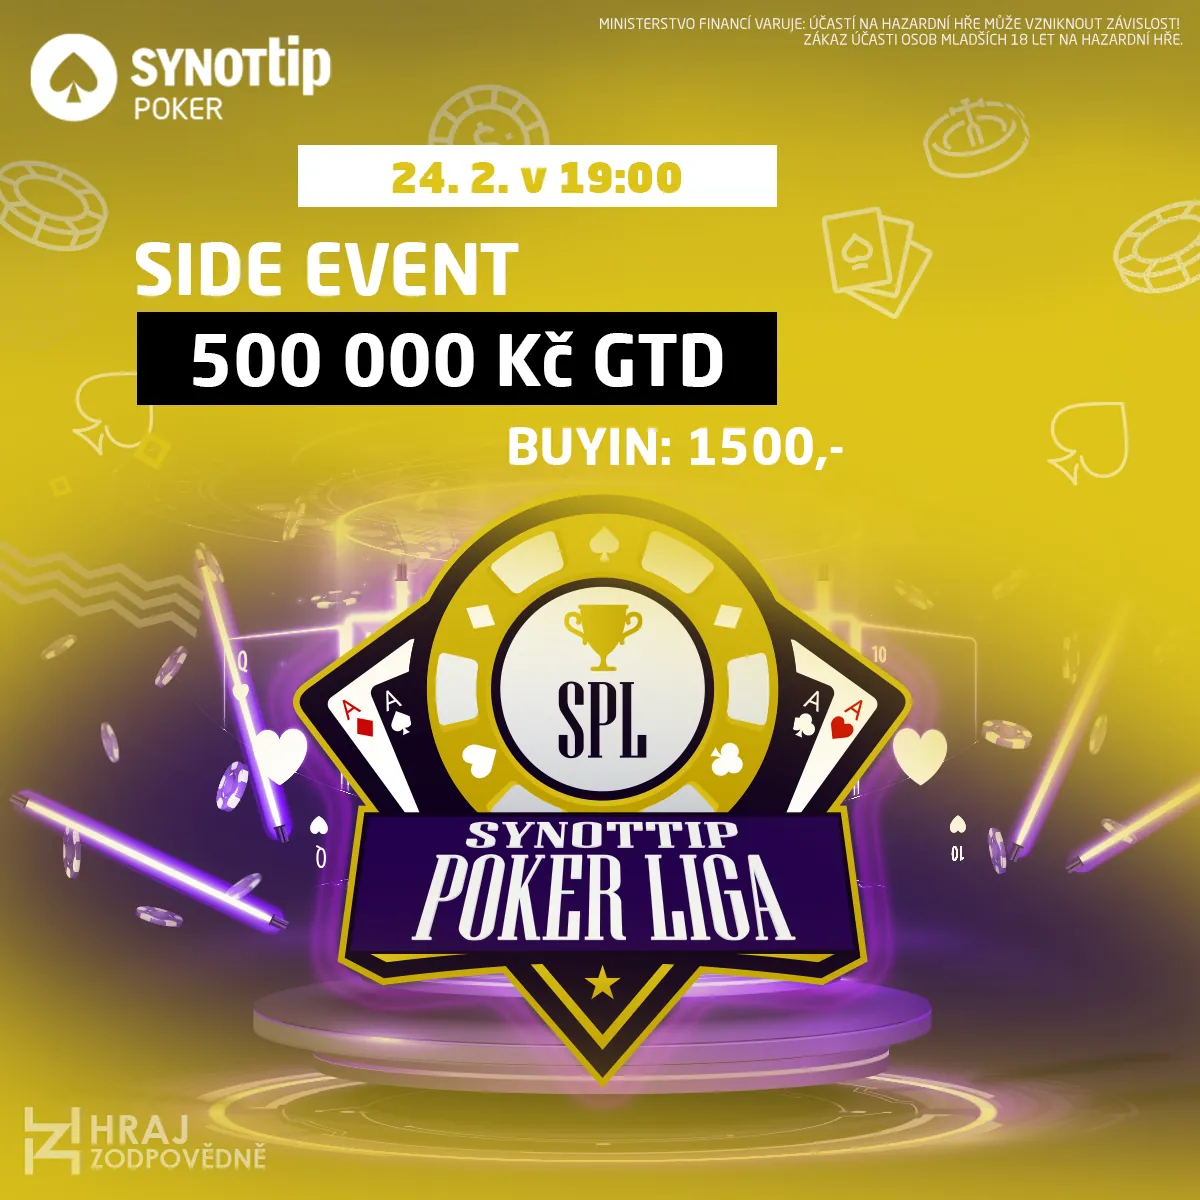 SPL online poker turnaje synottip.cz